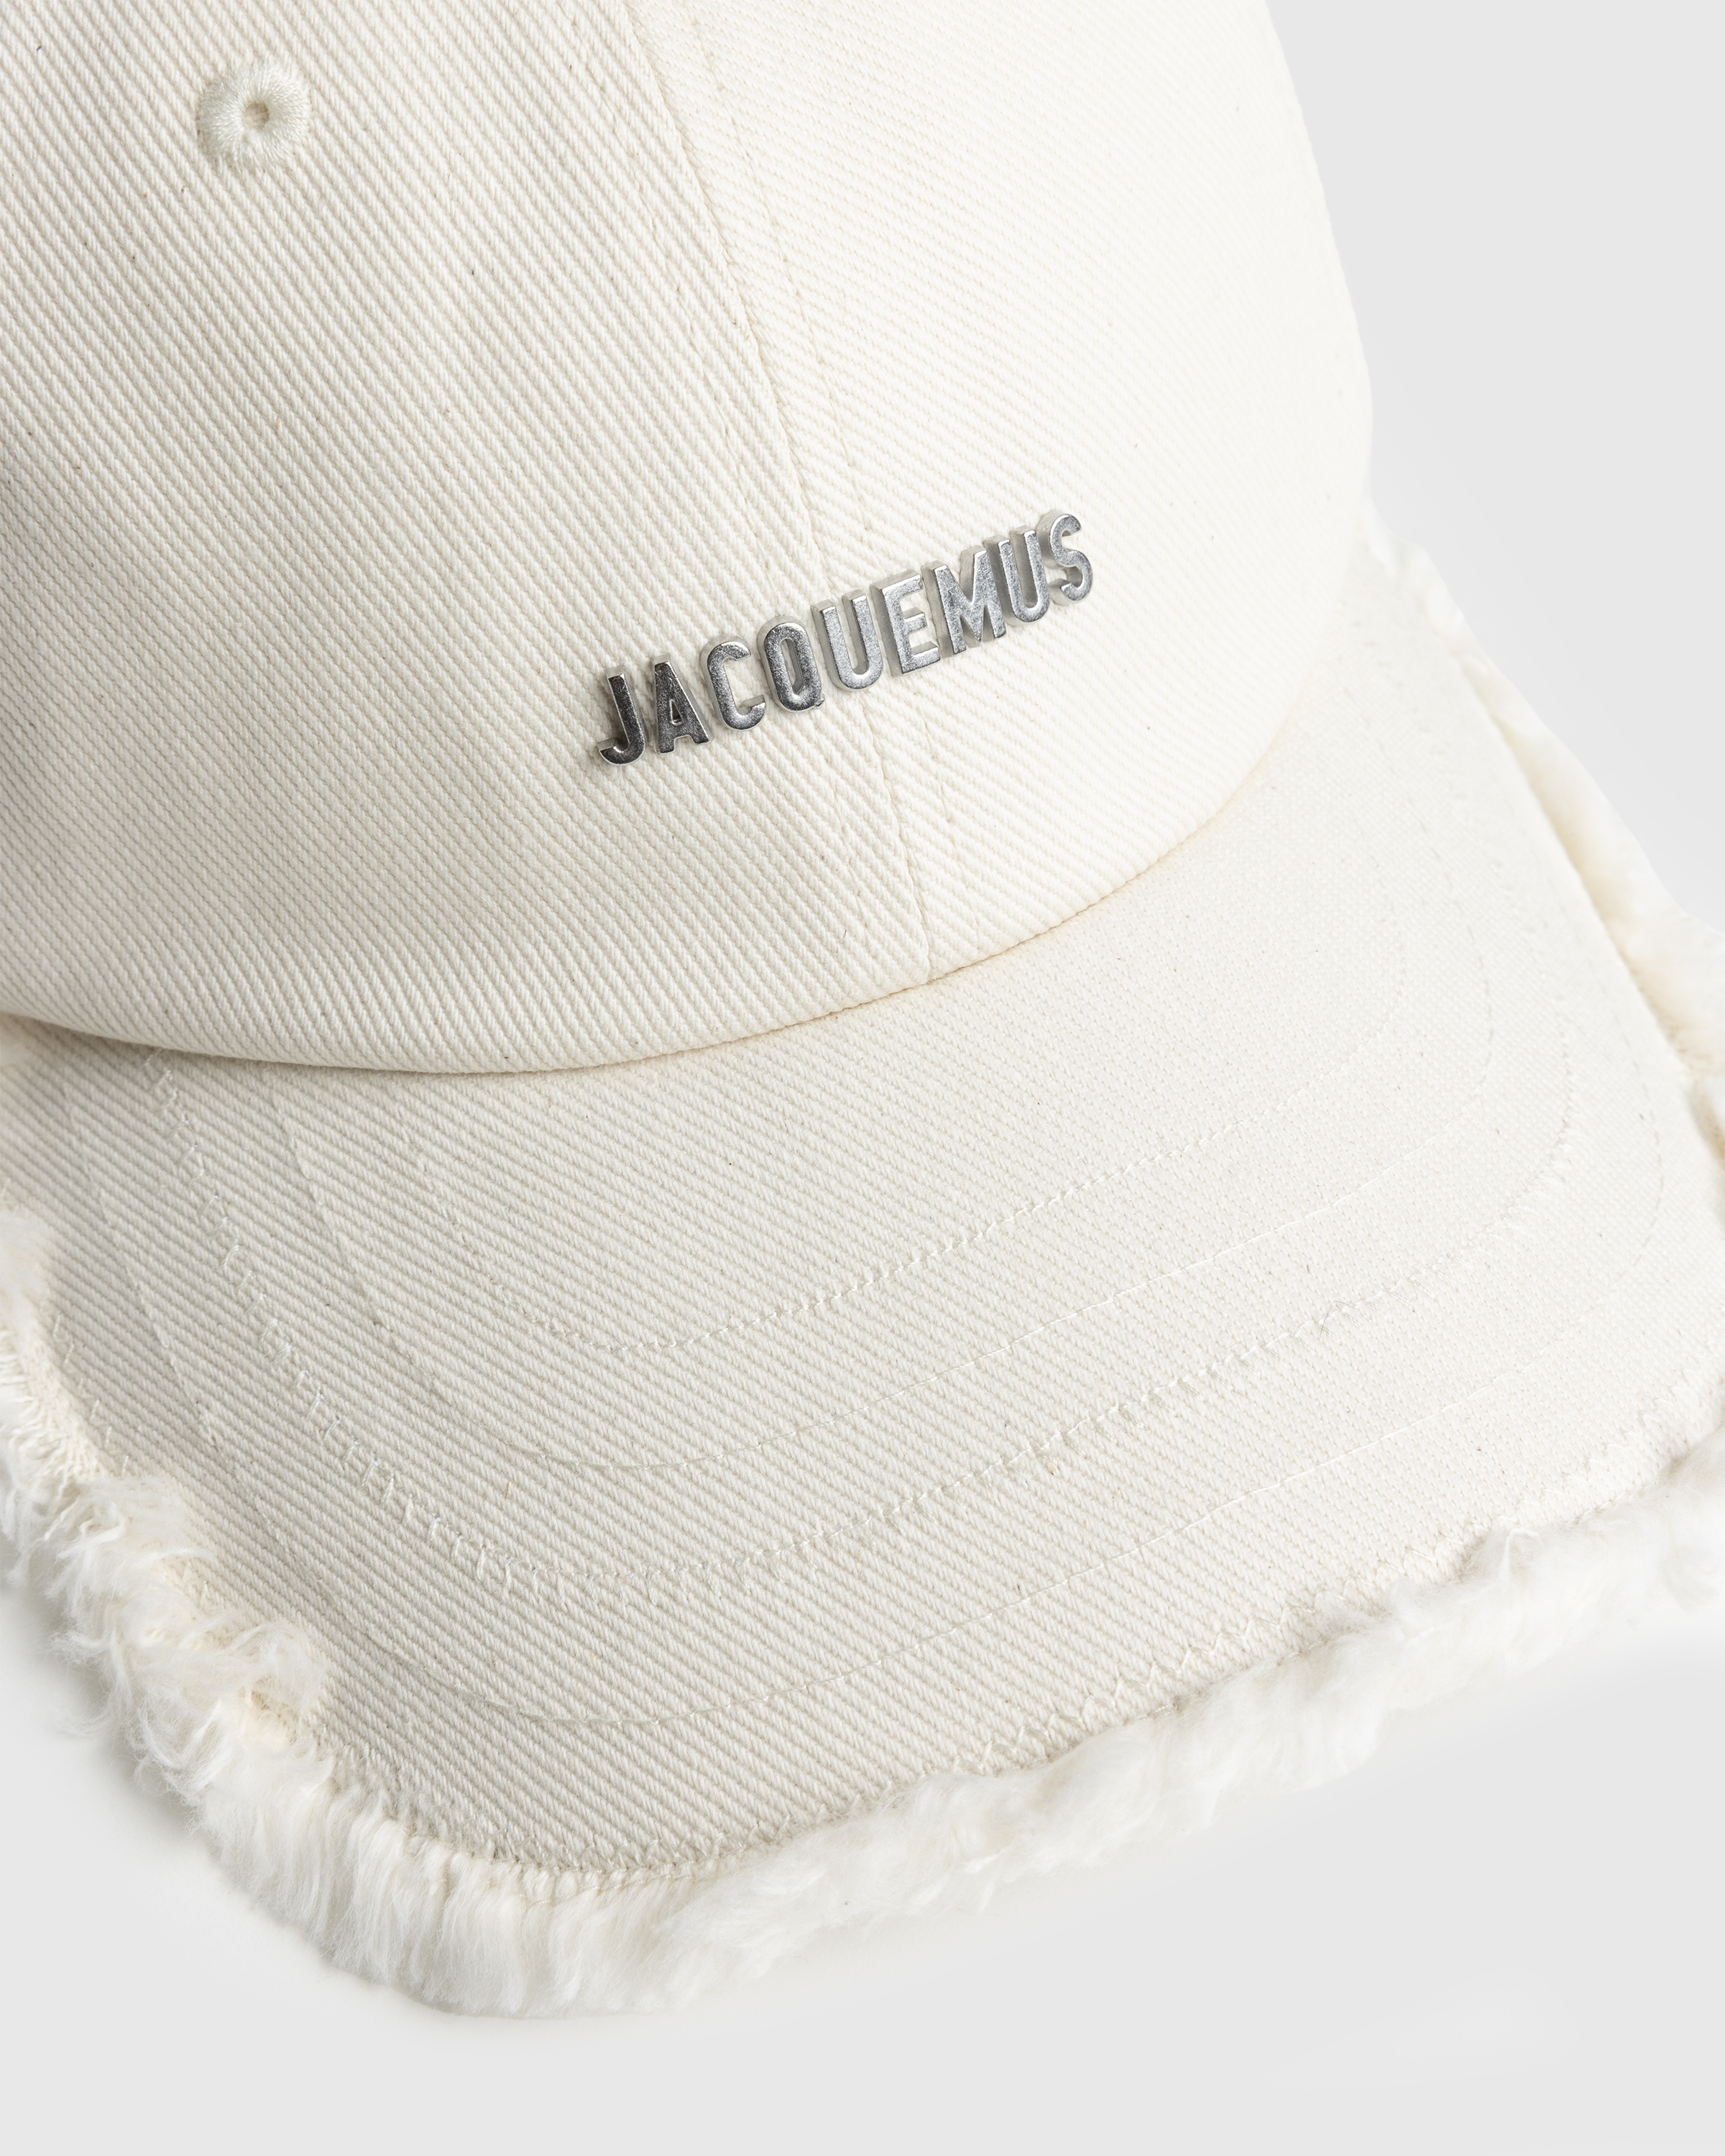 JACQUEMUS – La Casquette Artichaut Off-White - Caps - White - Image 5